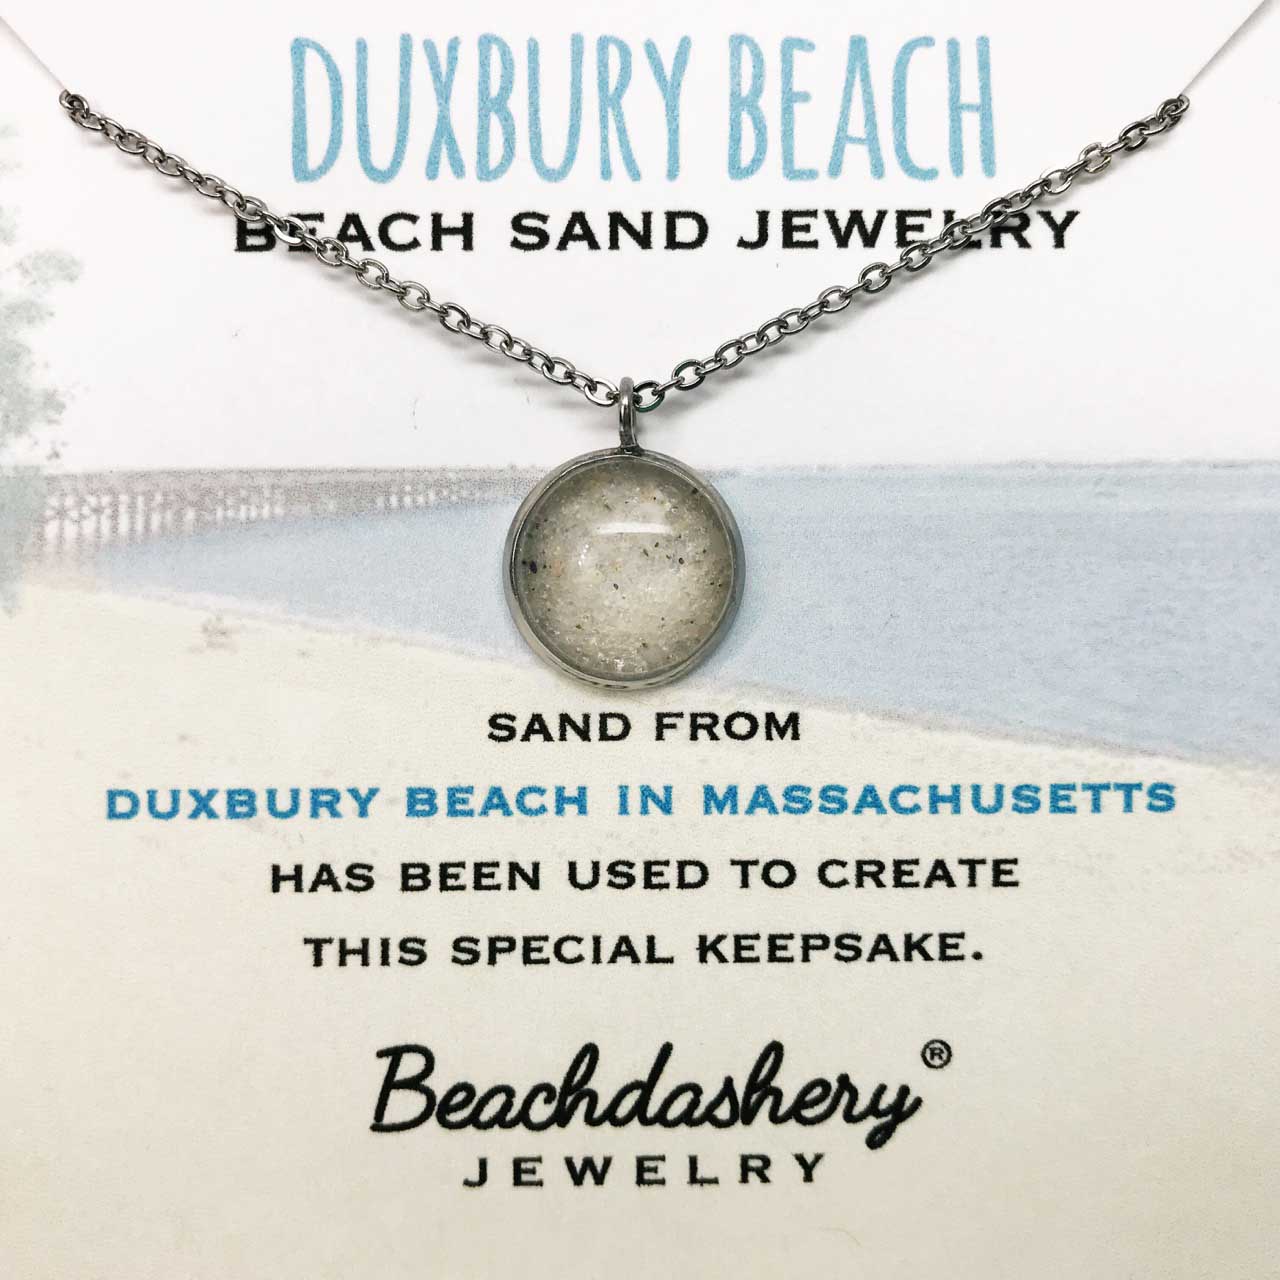 Duxbury Beach Sand Jewelry Beachdashery